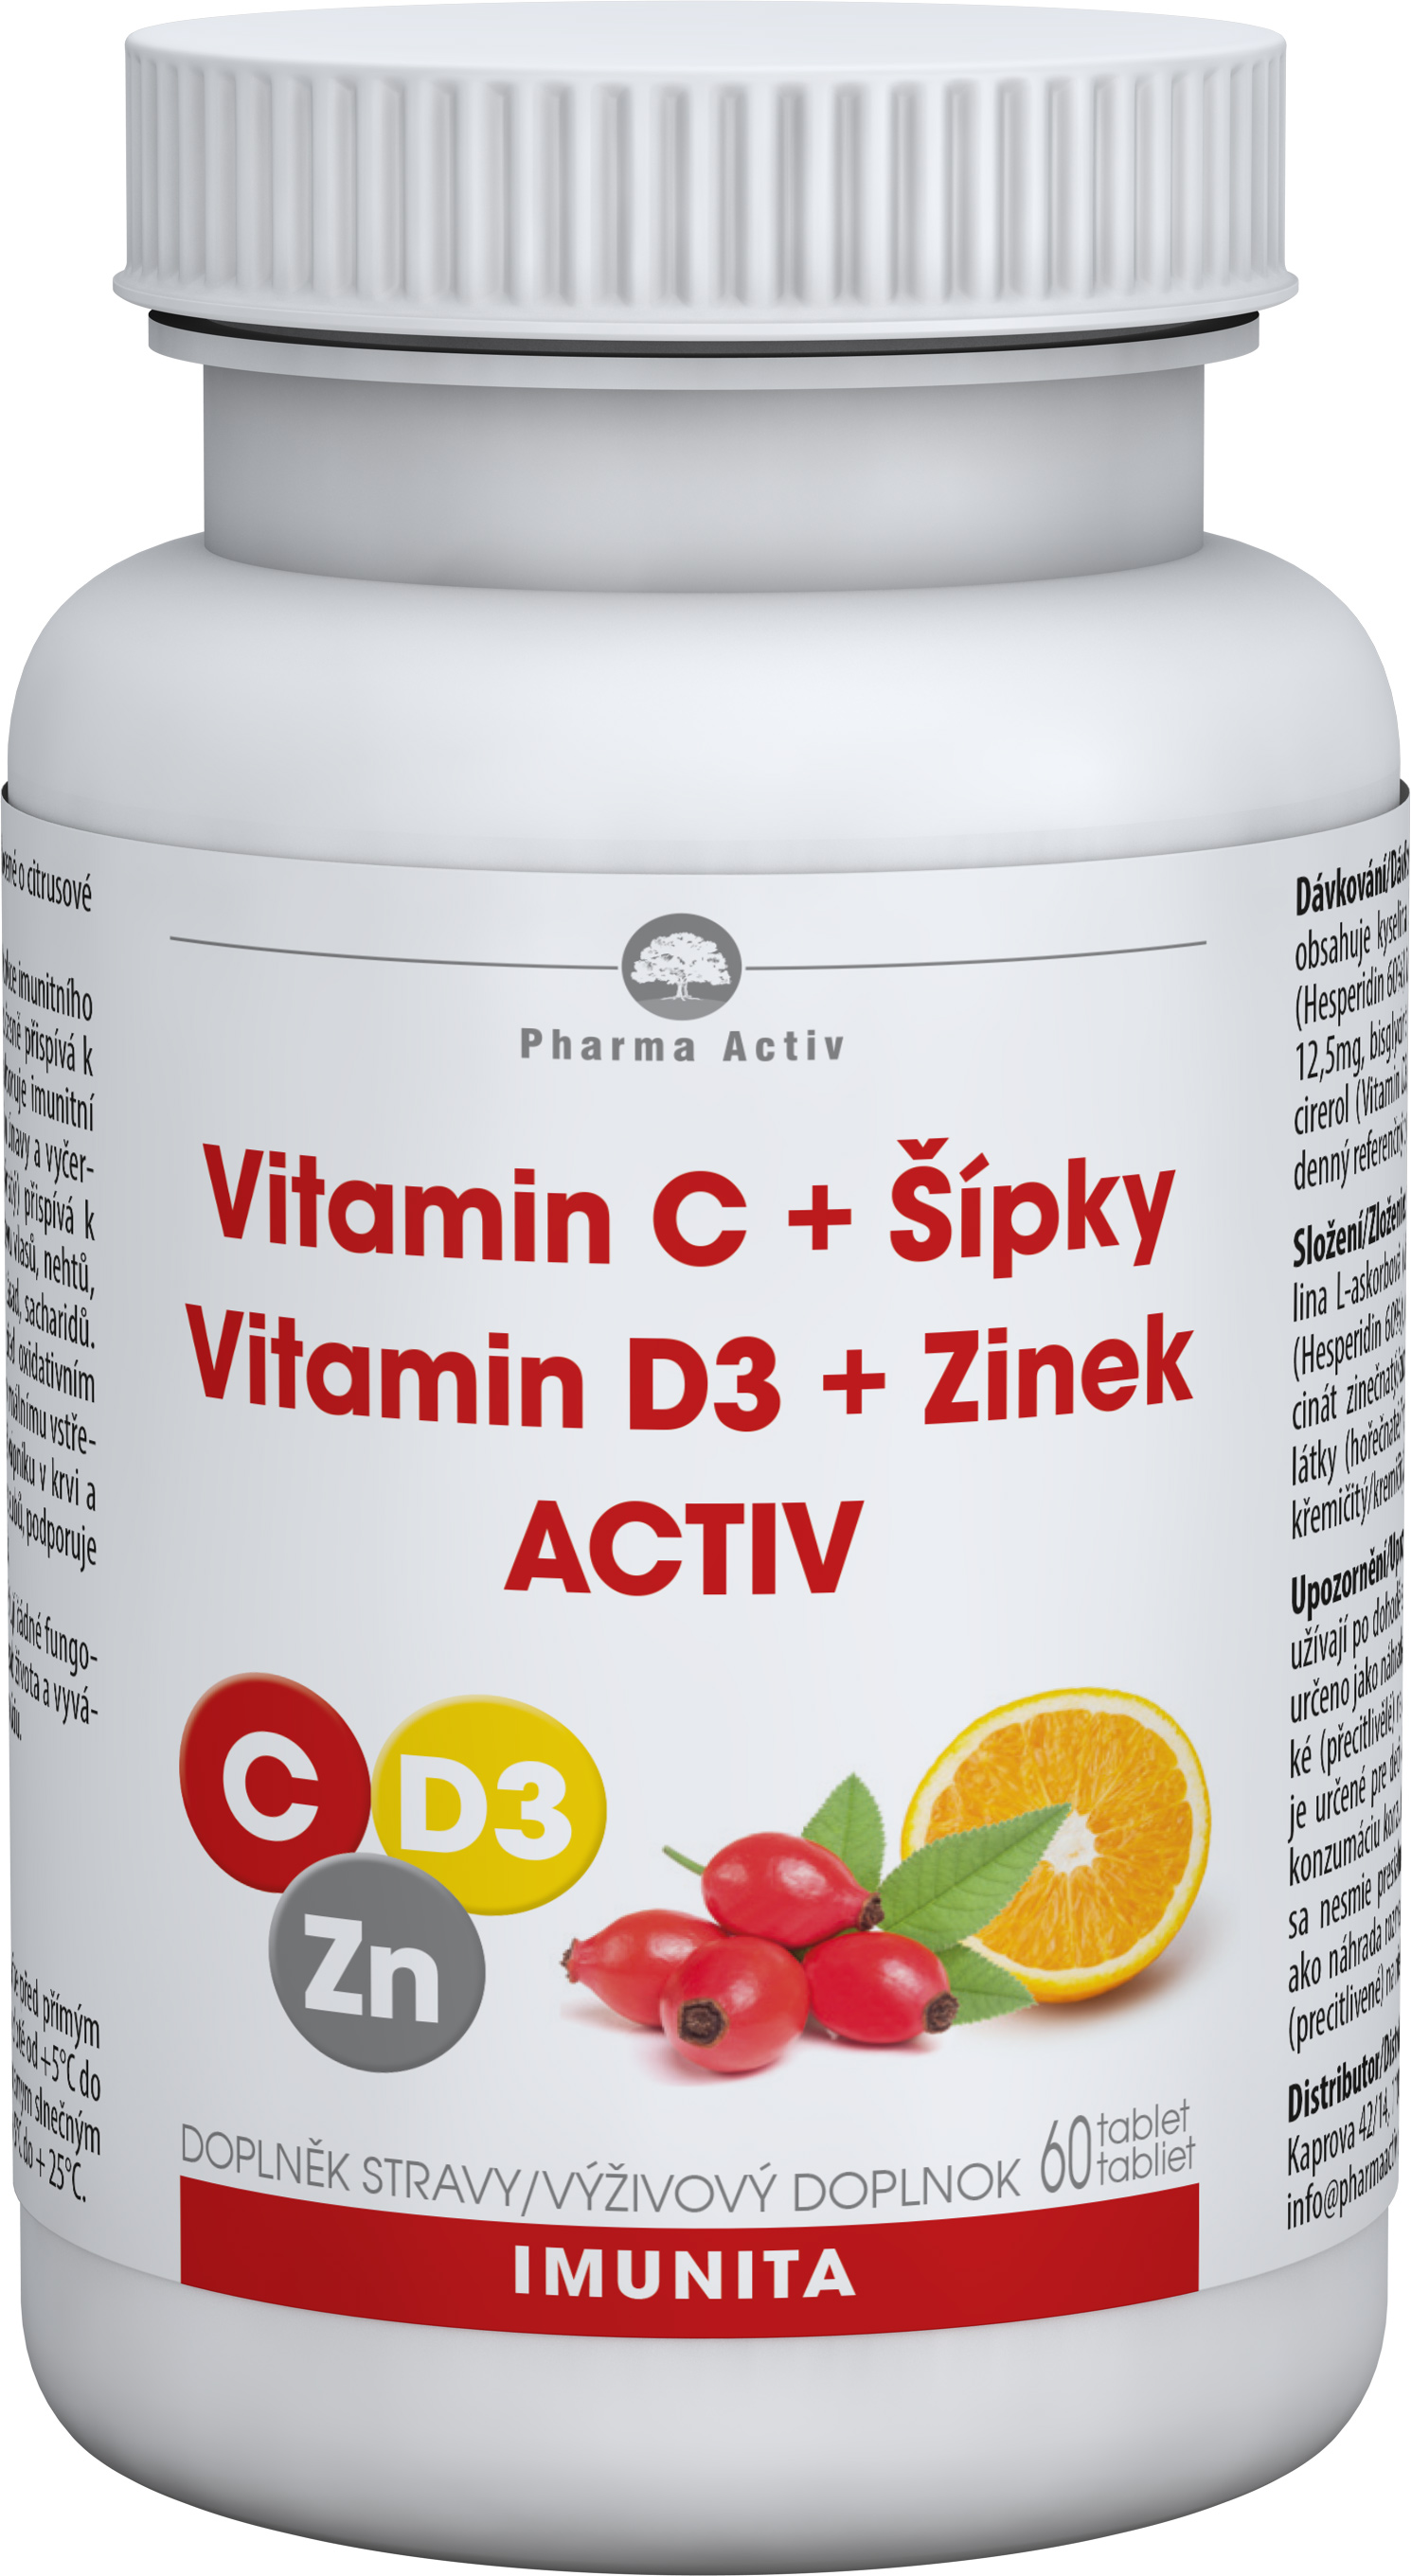 Zobrazit detail výrobku Pharma Activ Vitamin C + Šípky, Vitamin D3 + Zinek ACTIV 60 tablet